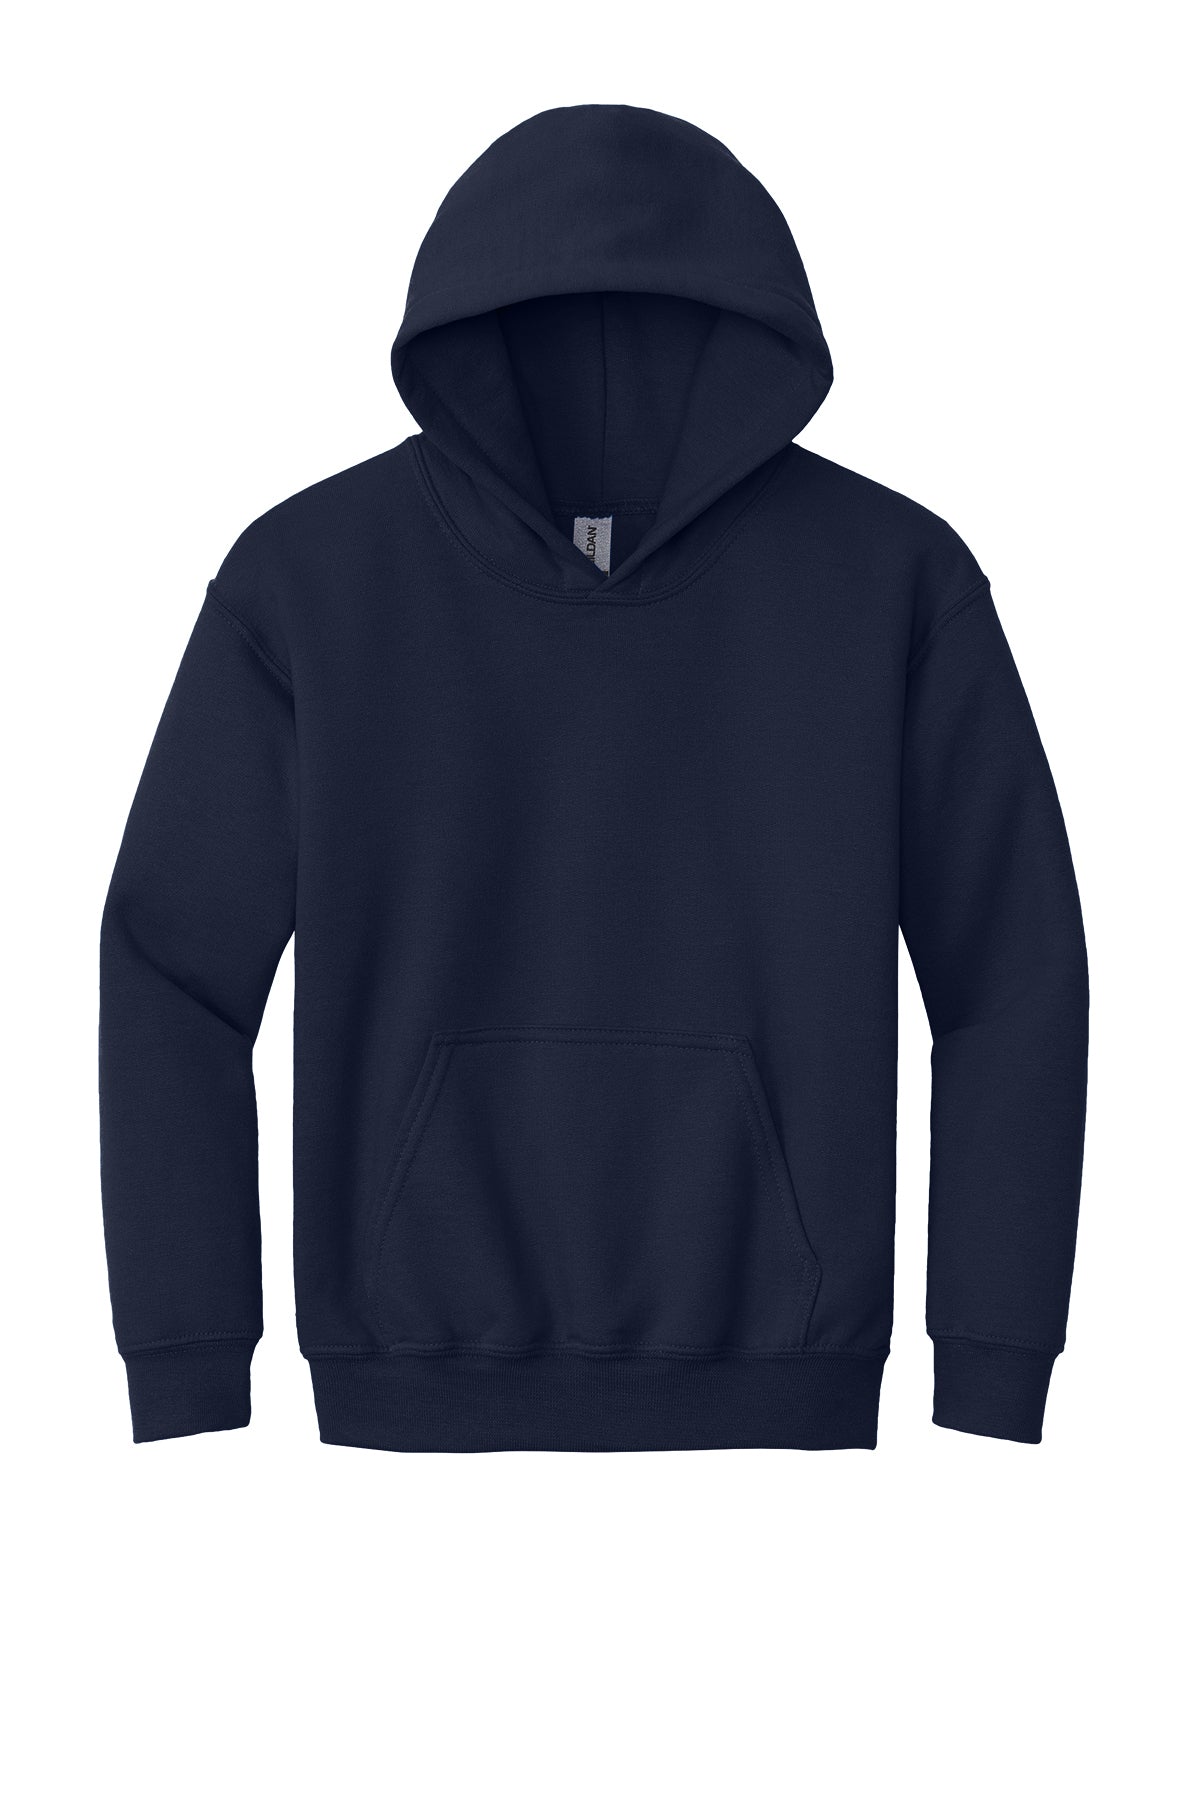 Port & Company® Essential Fleece Pullover Hooded Sweatshirt pc90h